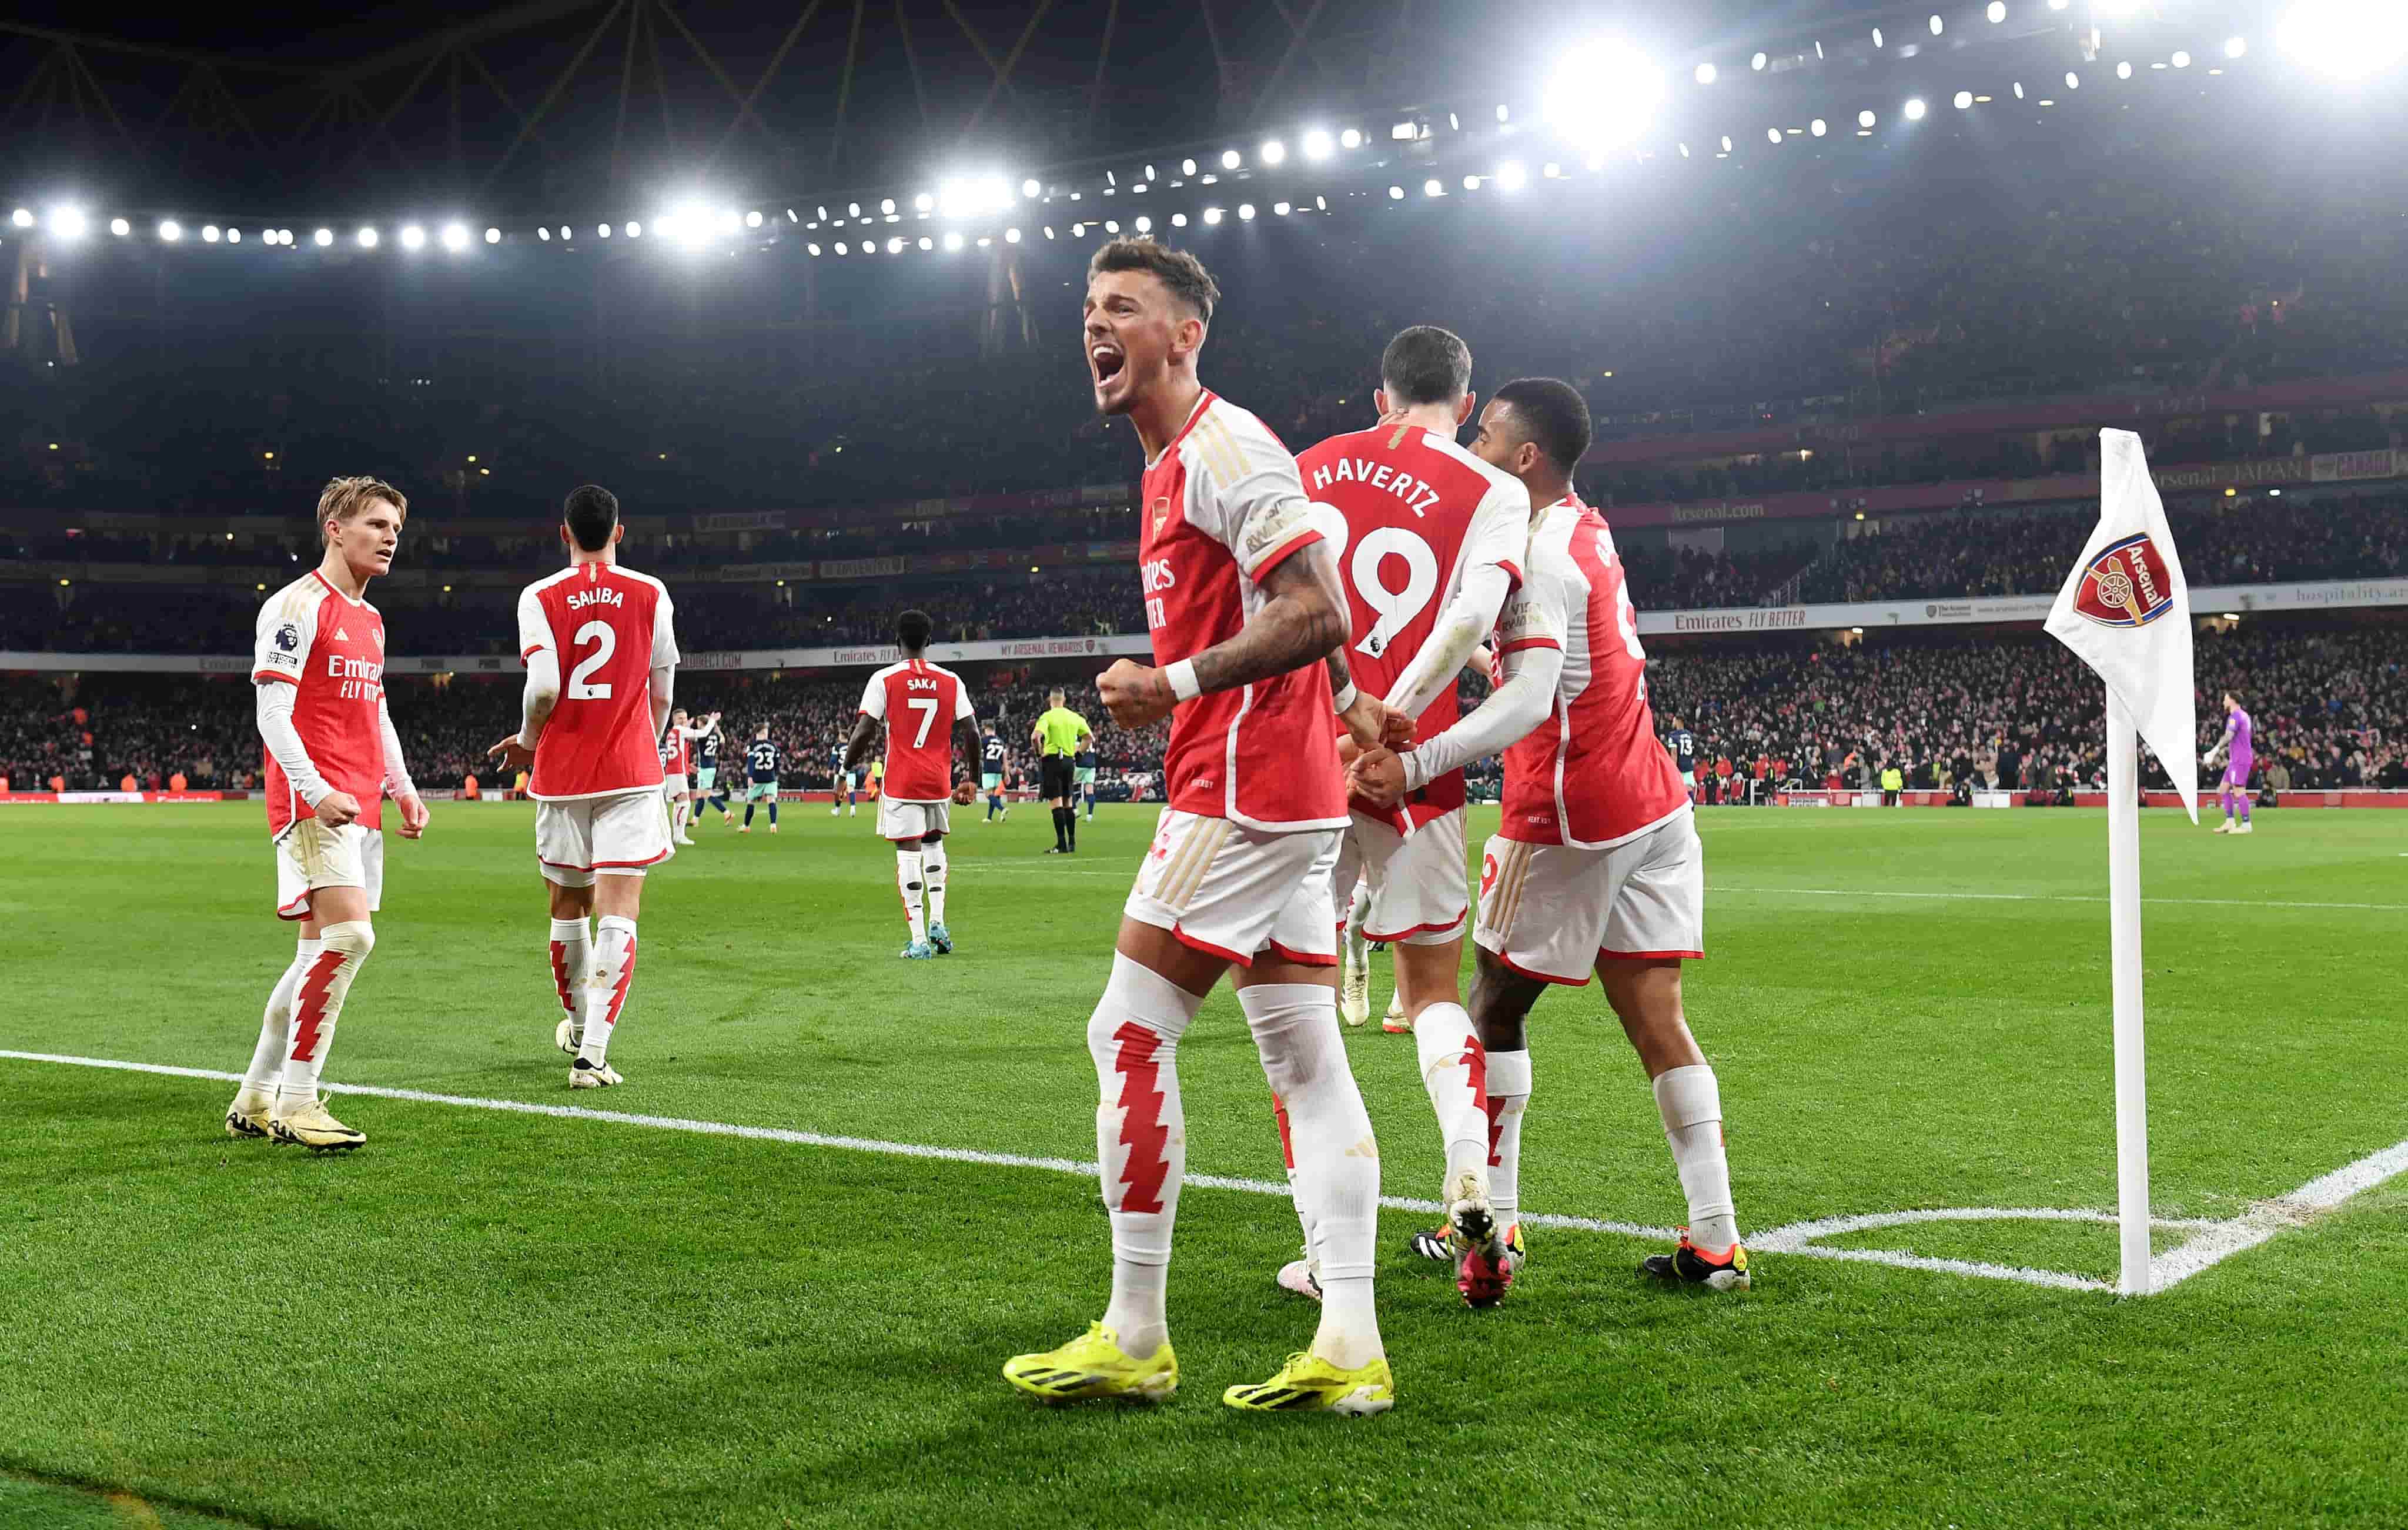 Havertz takes Arsenal top of Premier League, Man Utd boost hopes